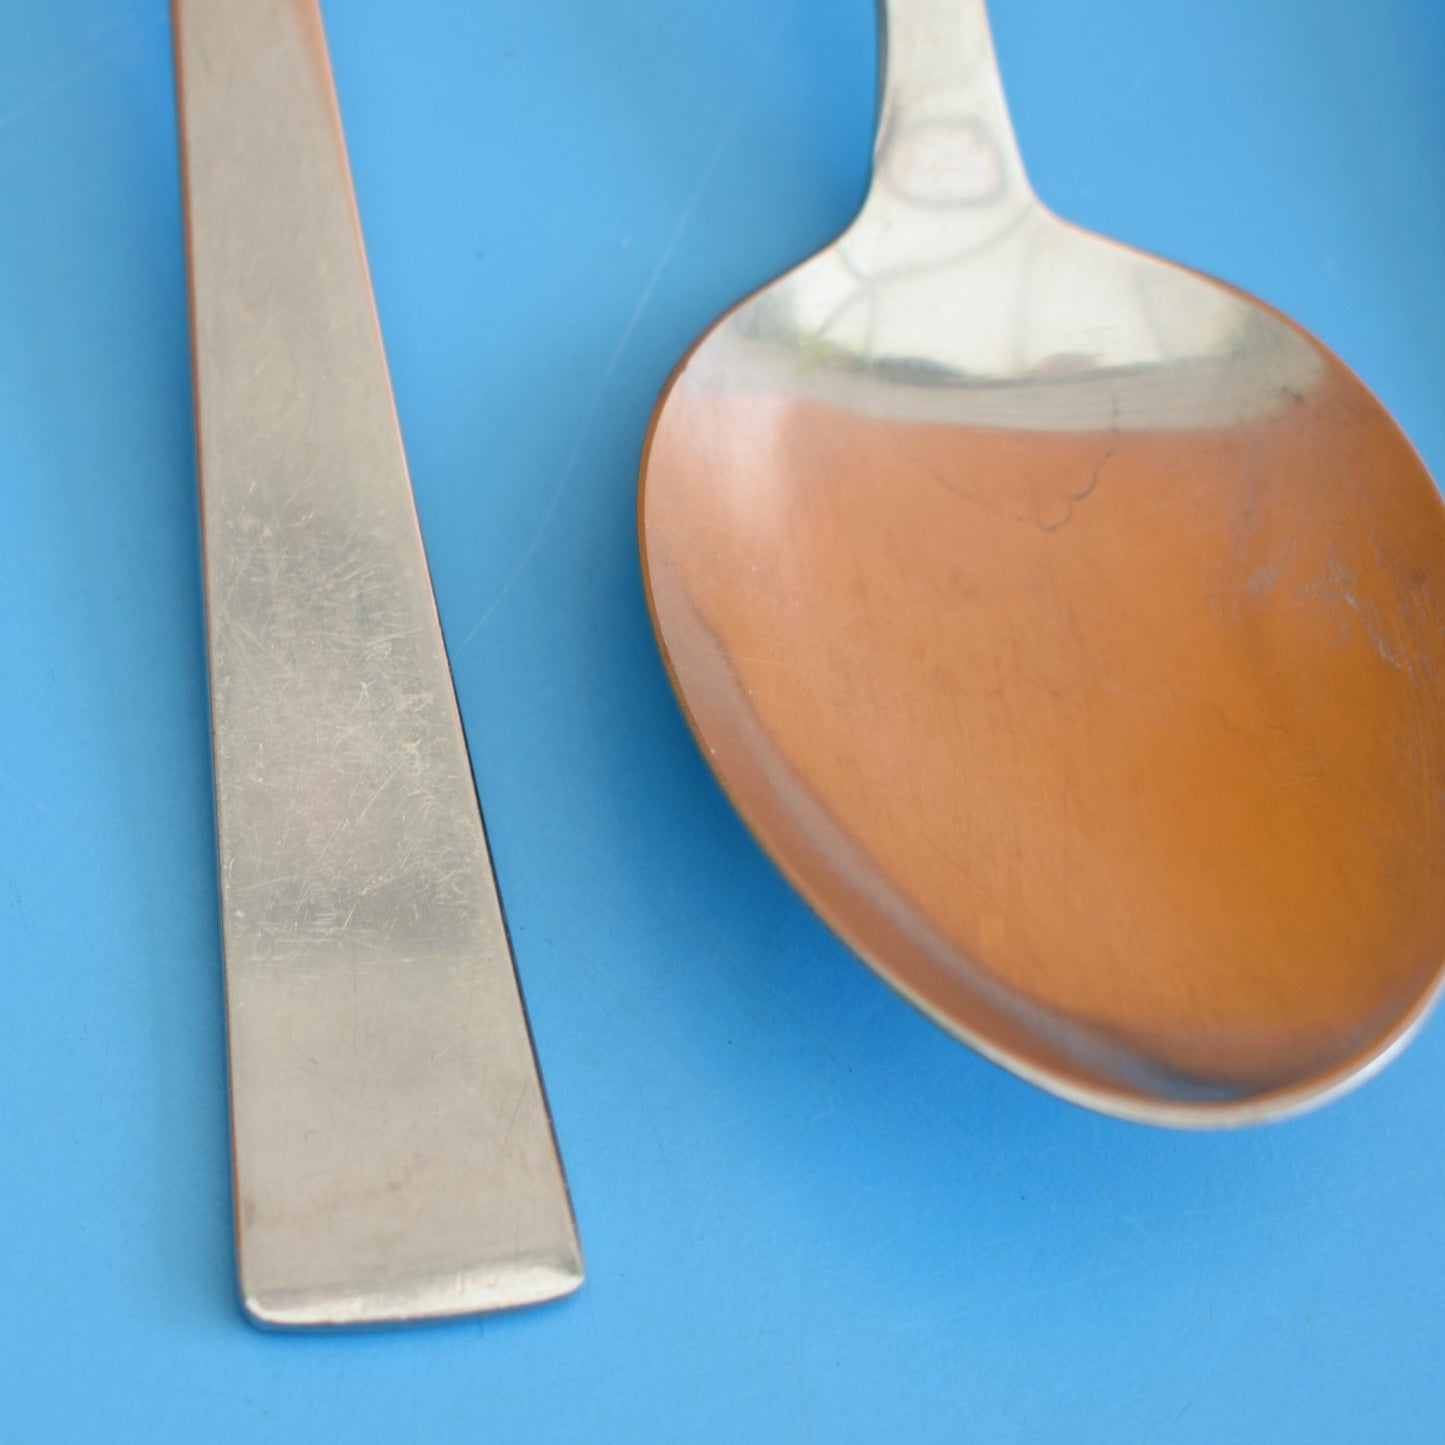 Vintage 1960s Stainless Steel Cutlery - Wallin Sweden